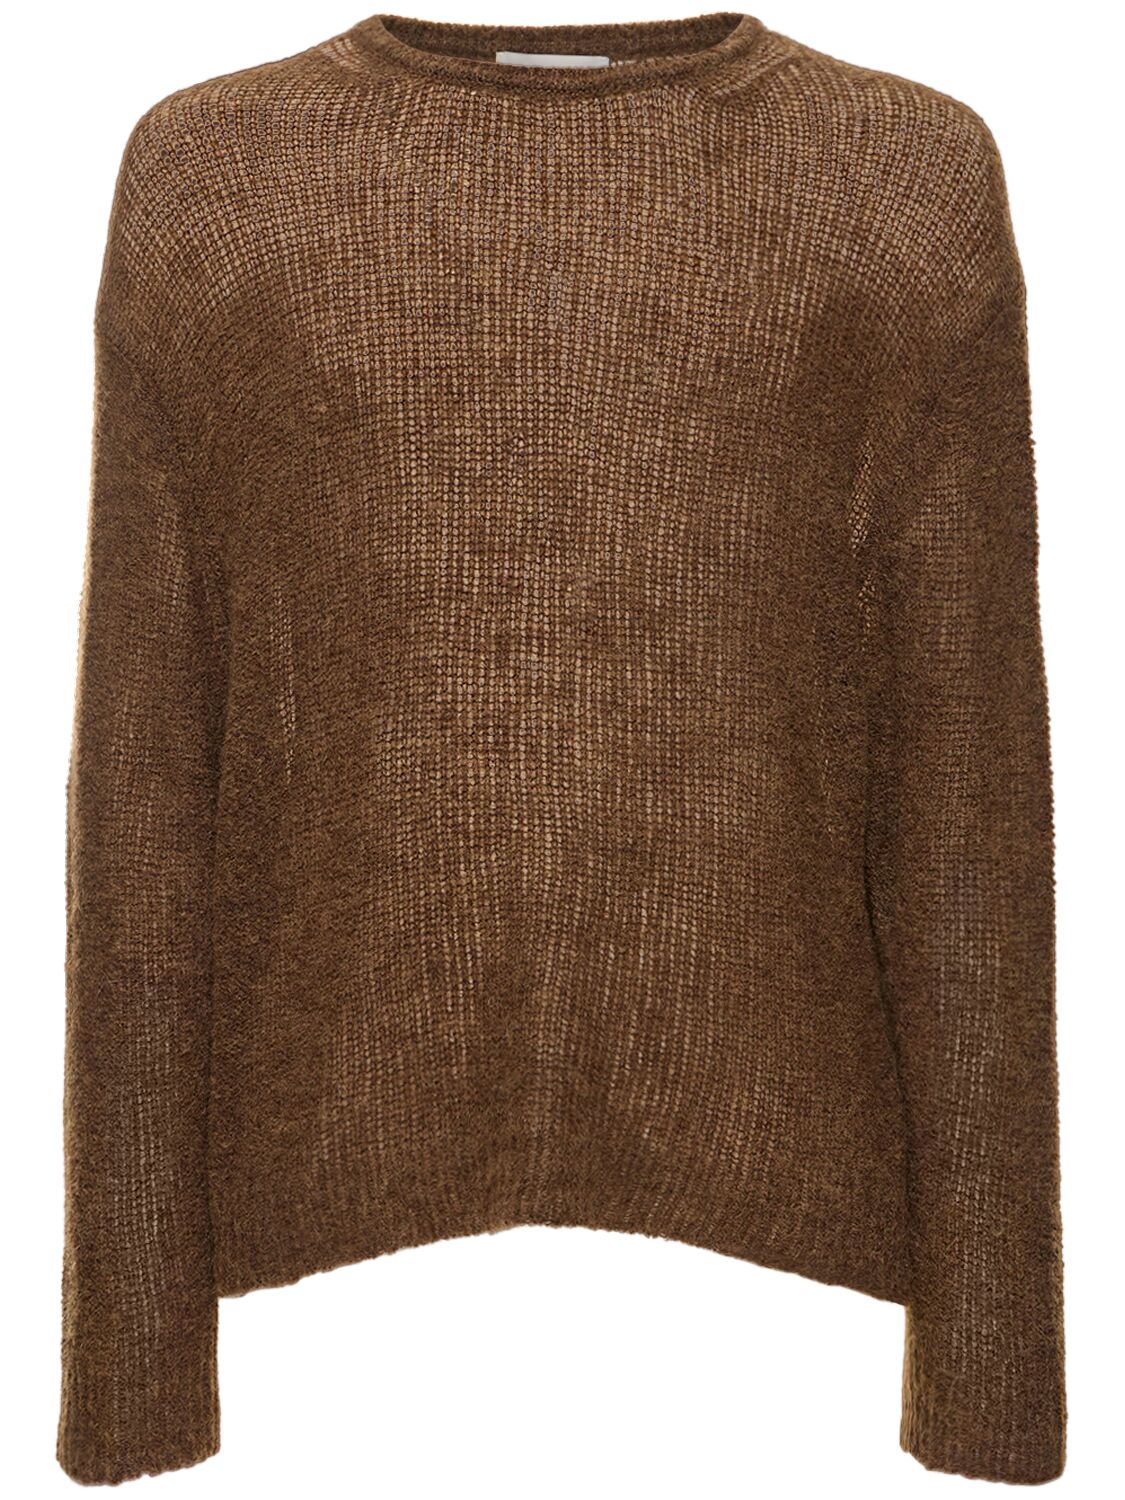 Image of Wool Blend Knit Crewneck Sweater